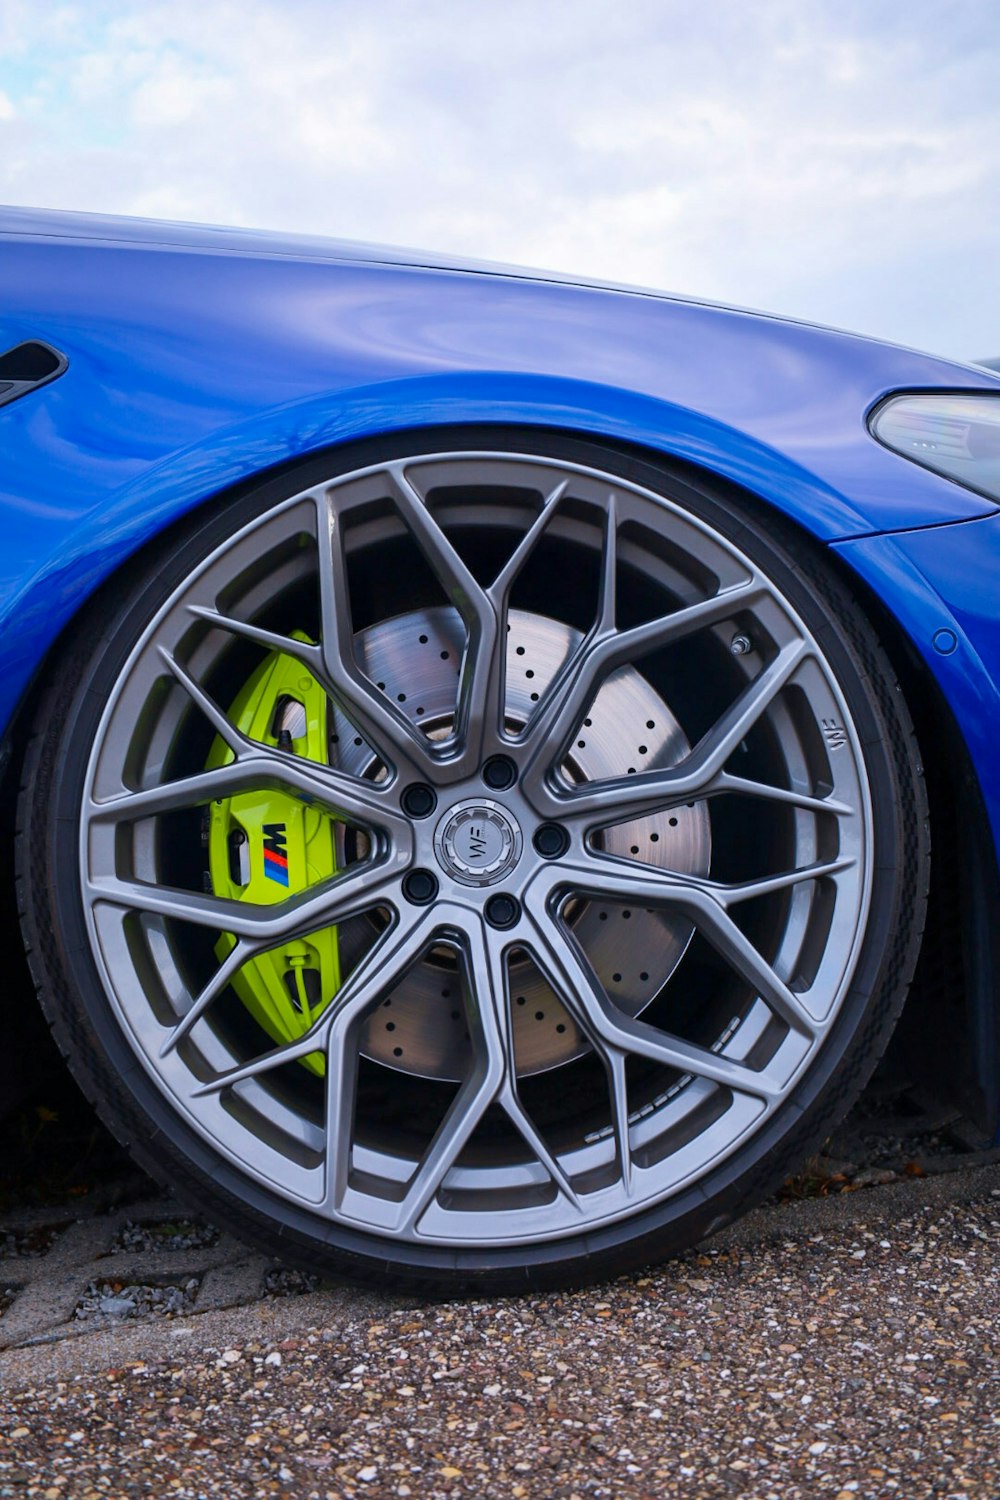 a close up of a blue sports car tire